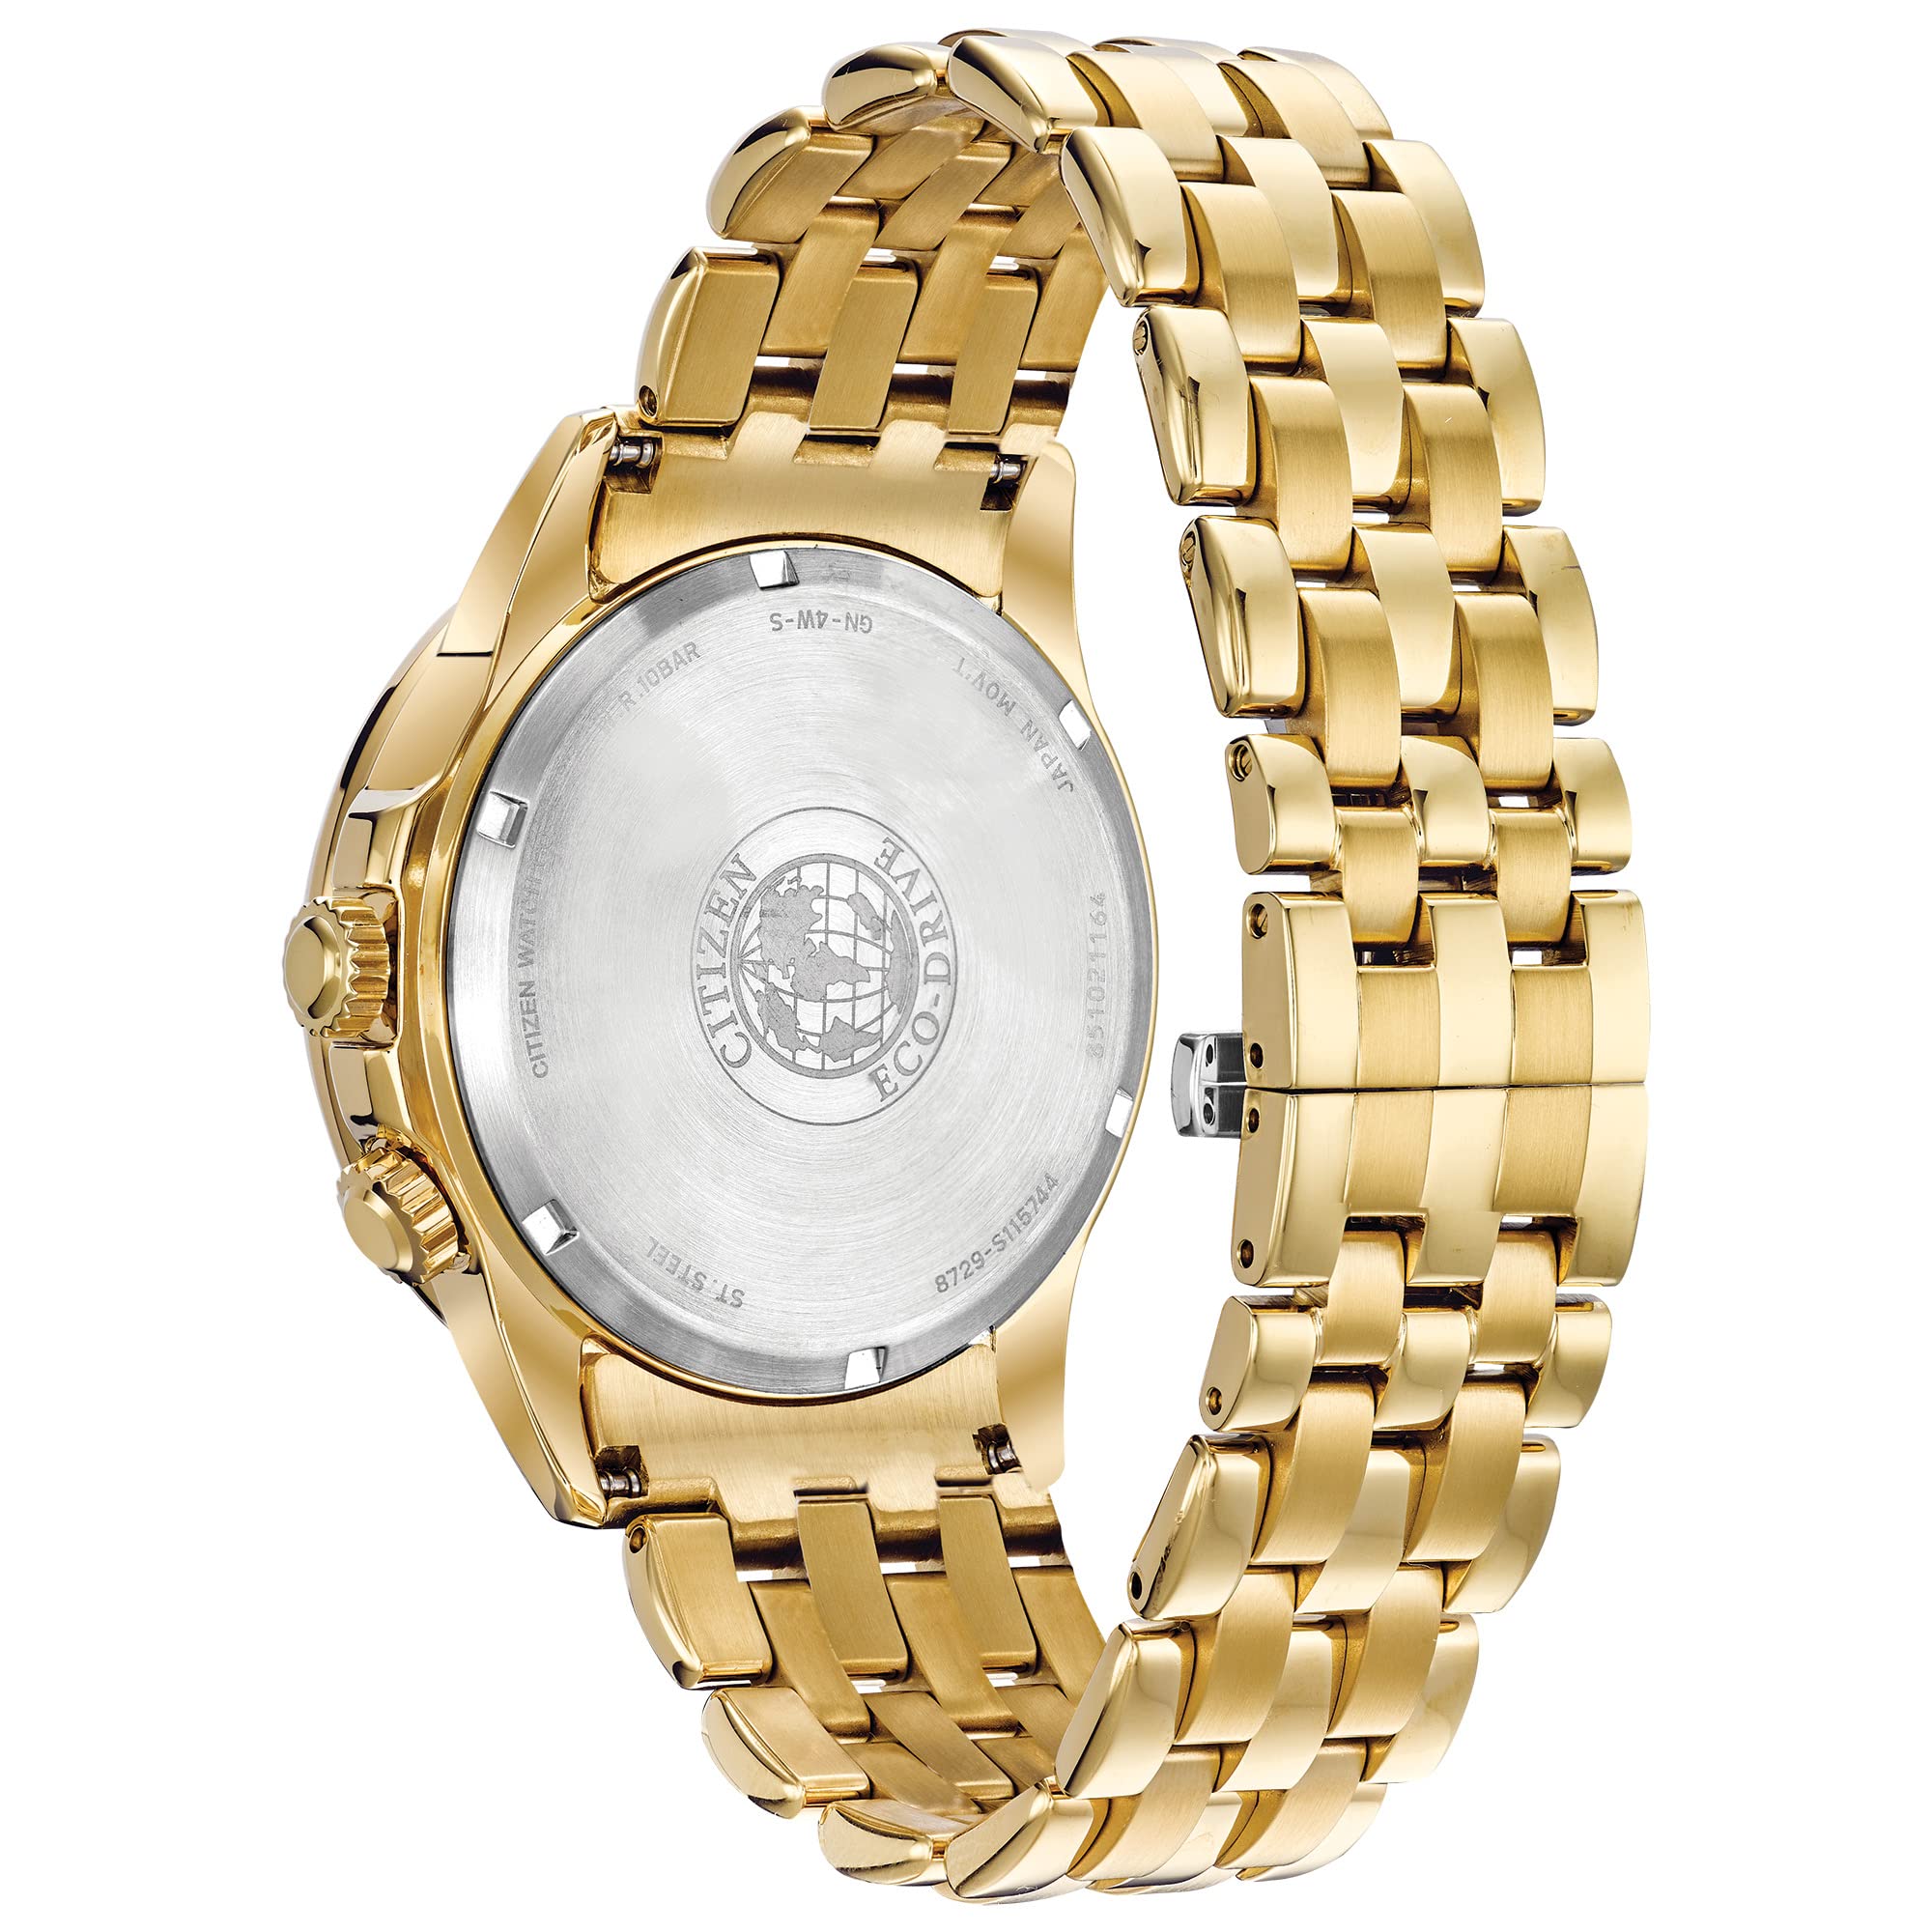 Citizen Men's Eco-Drive Classic Calendrier Watch in Gold-Tone Stainless Steel, Diamonds, Black Dial (Model: BU2082-56E)